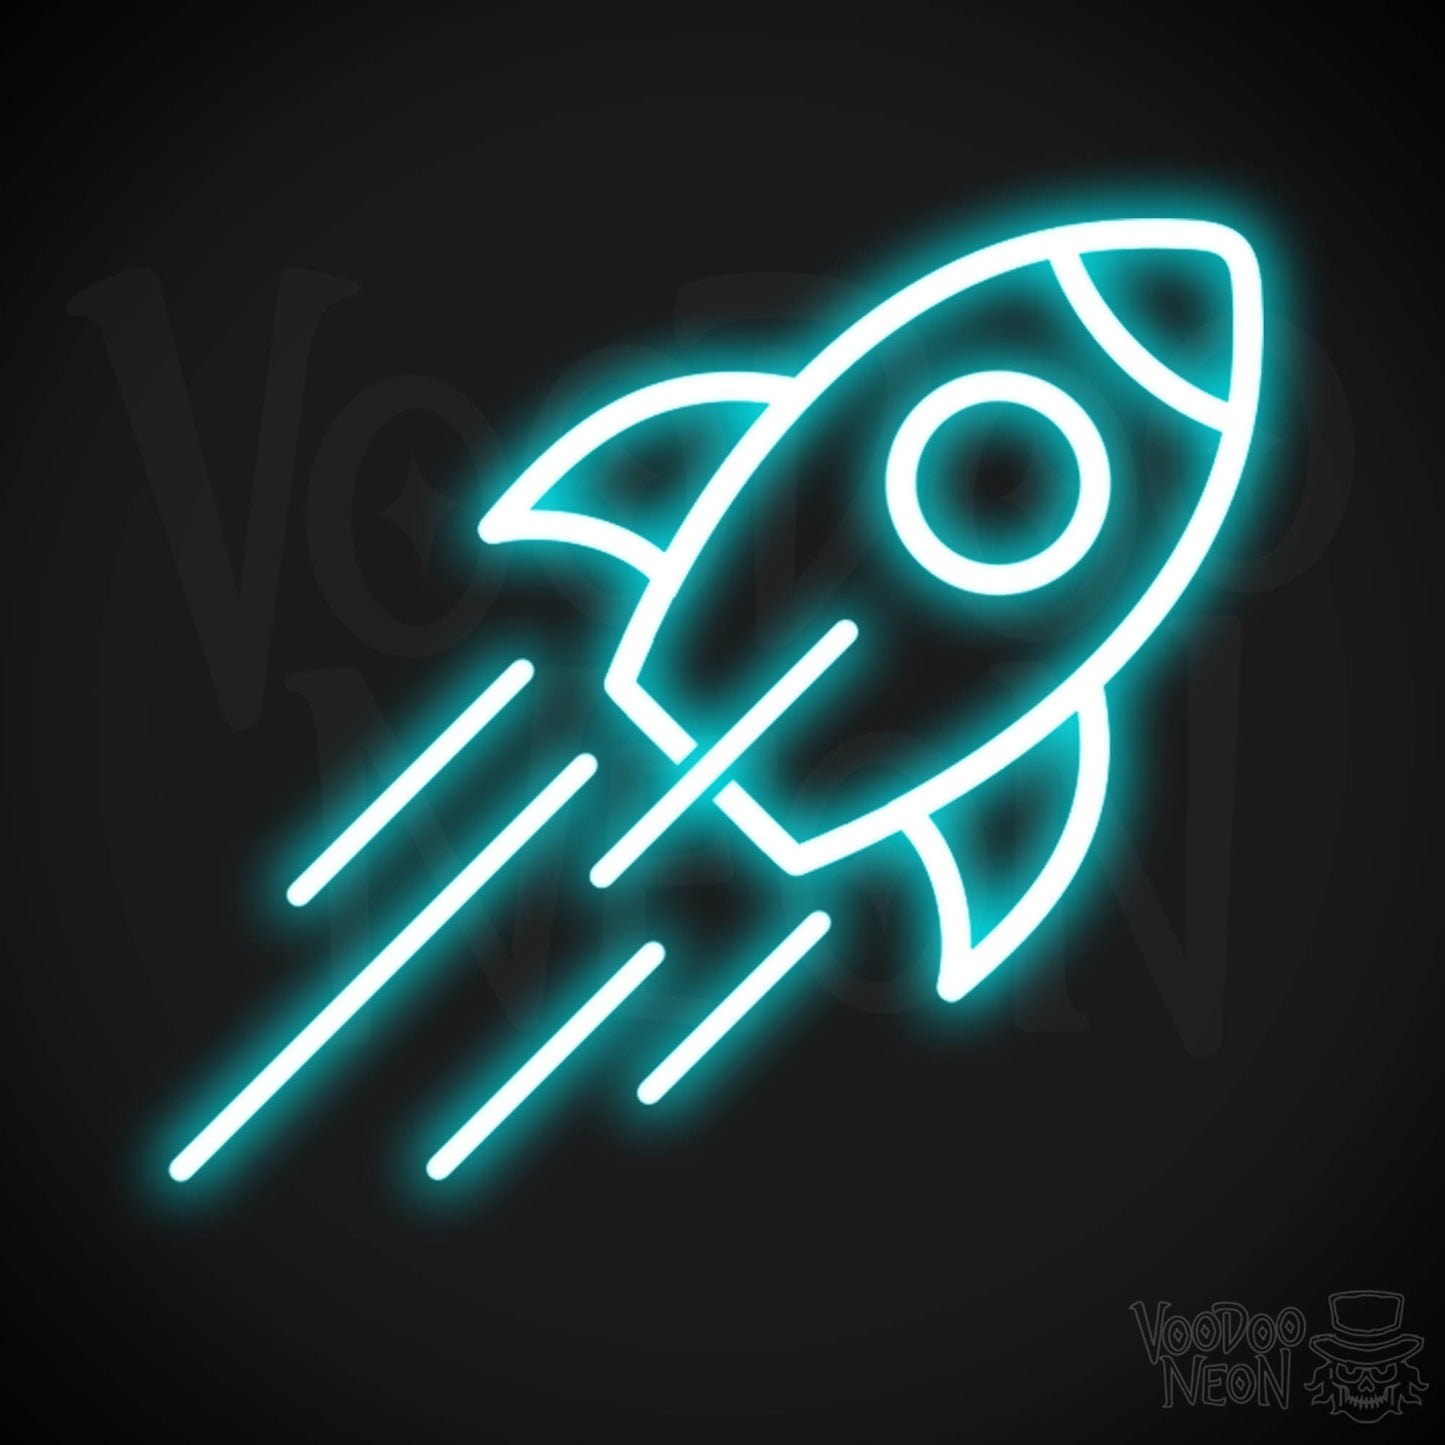 Neon Rocket - Rocket Neon Sign - Rocket Ship Neon Wall Art - Color Ice Blue